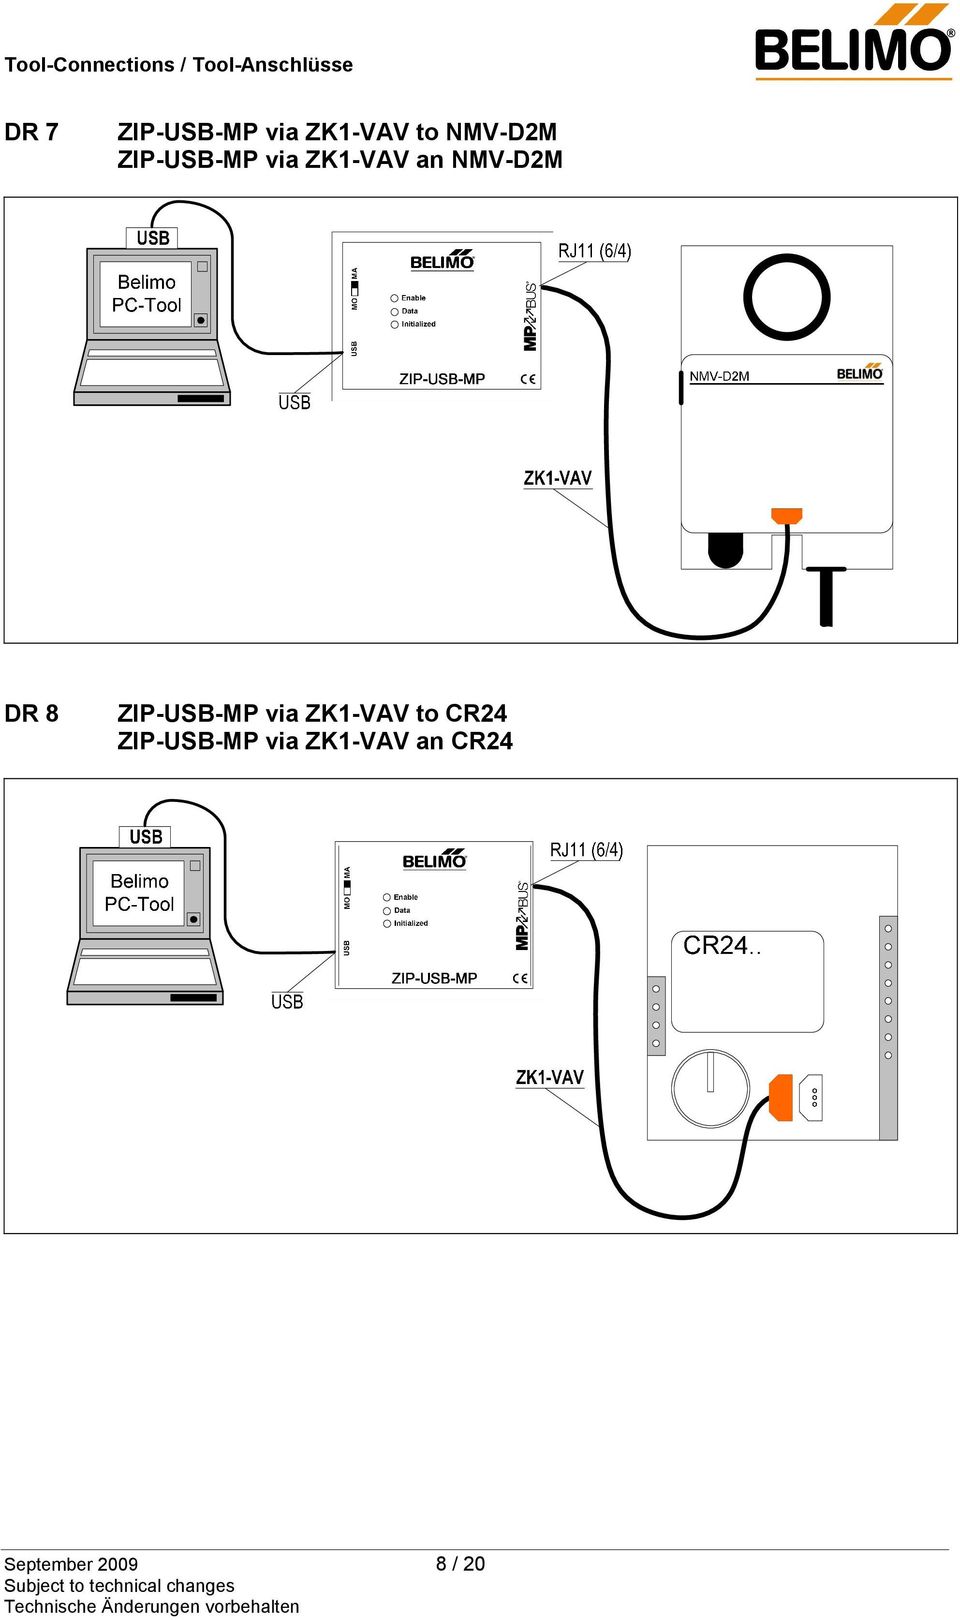 ZIP-USB-MP via ZK1-VAV to CR24